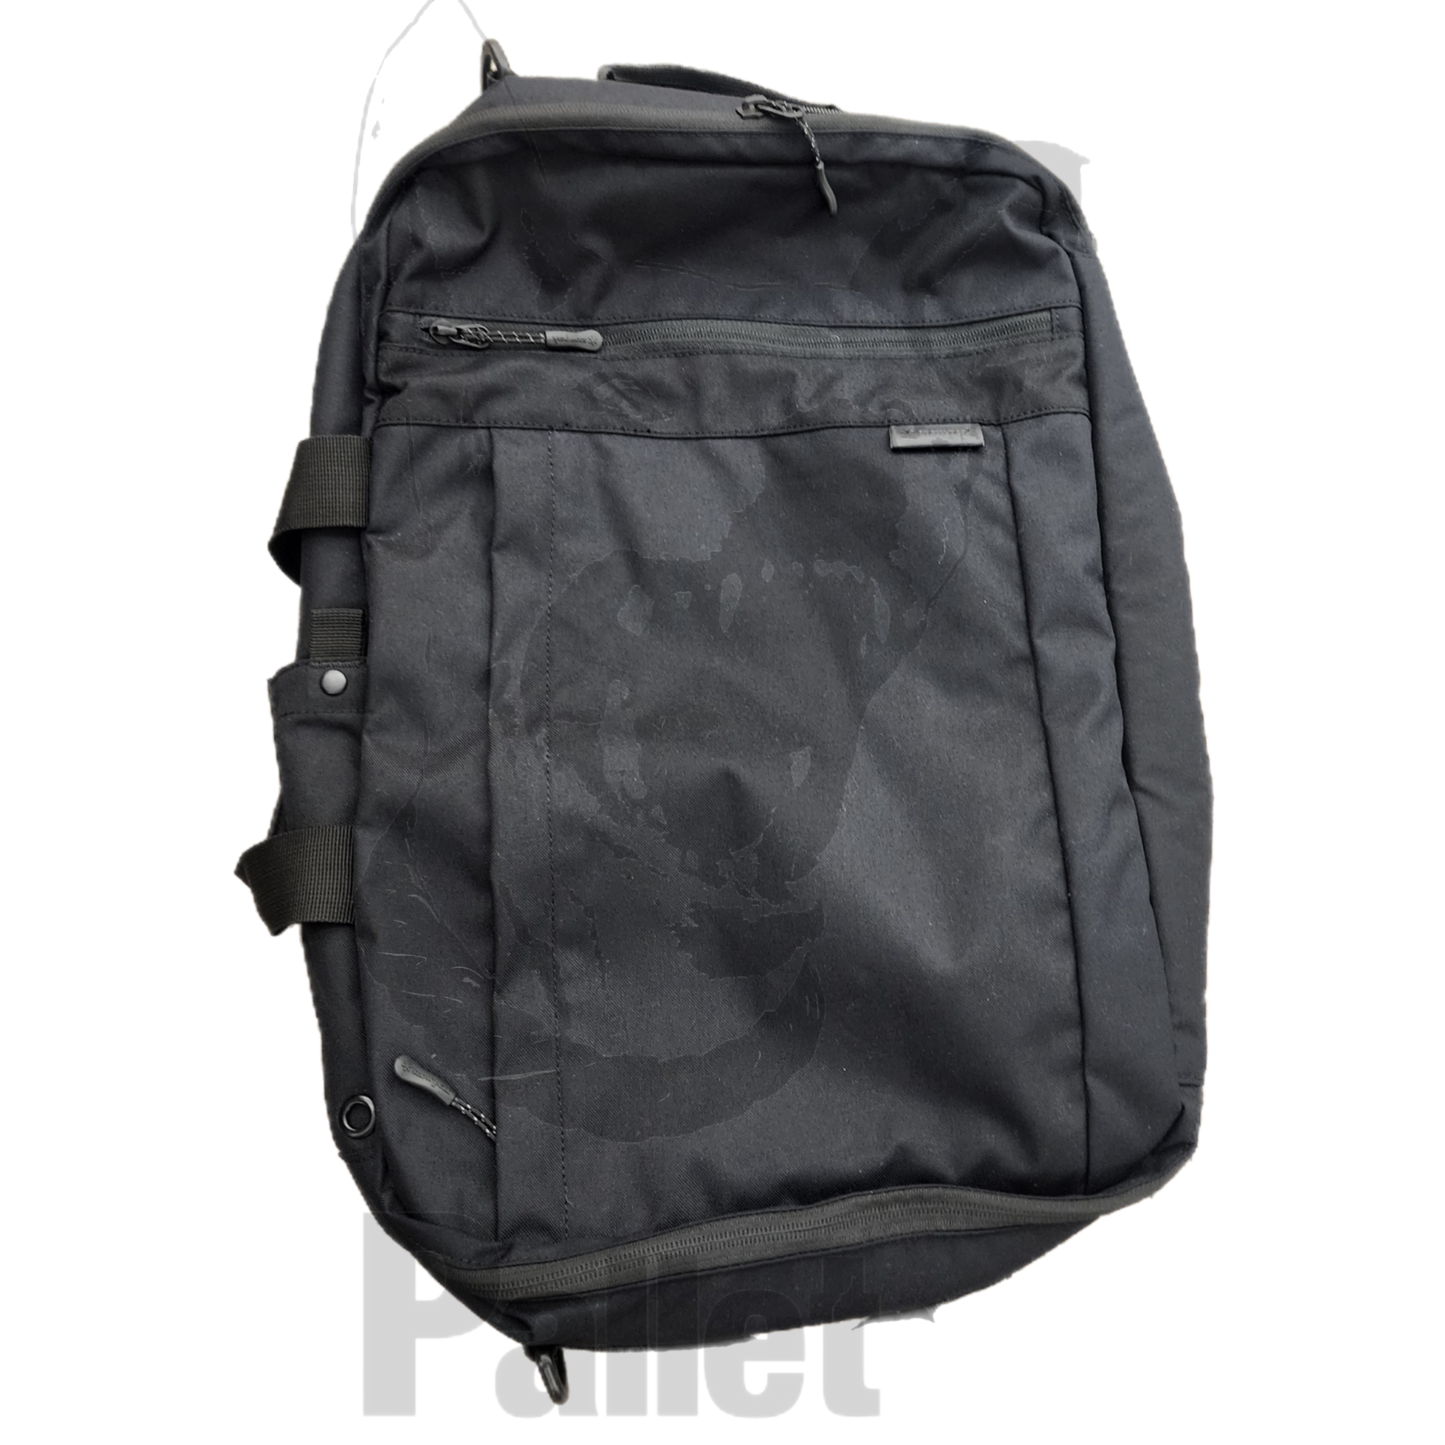 Snow Peak - Black Travel Bag" - Size OS